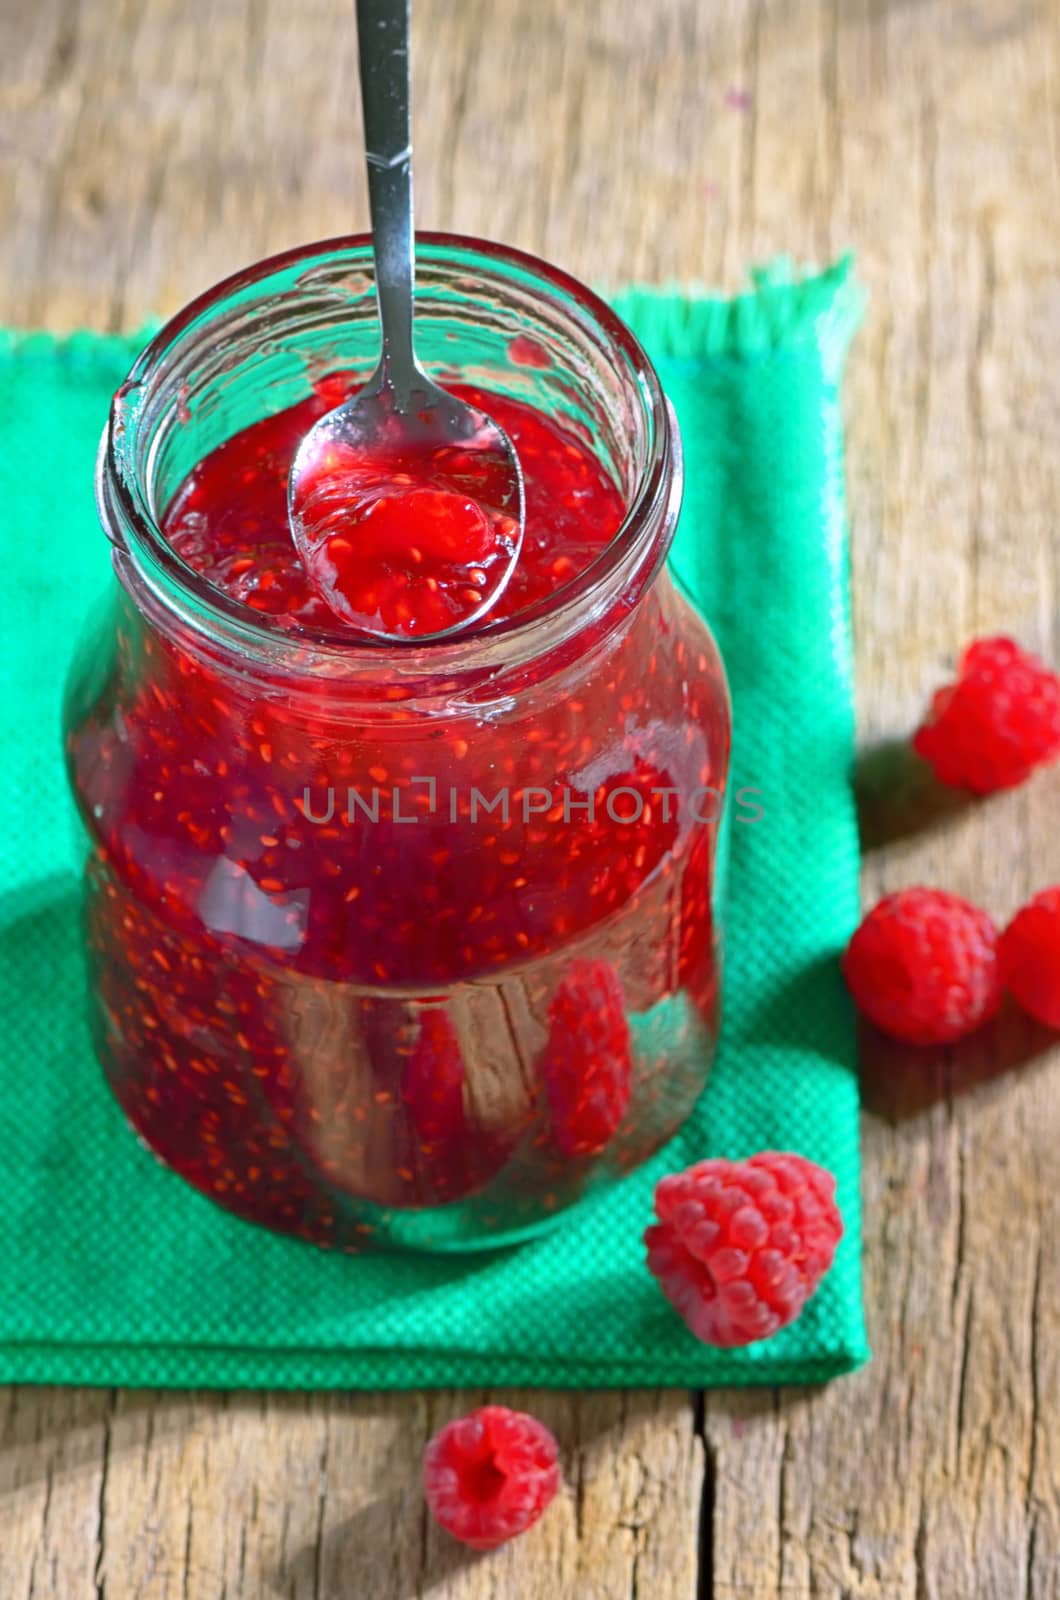 Homemade Raspberry Jam against a wooden background